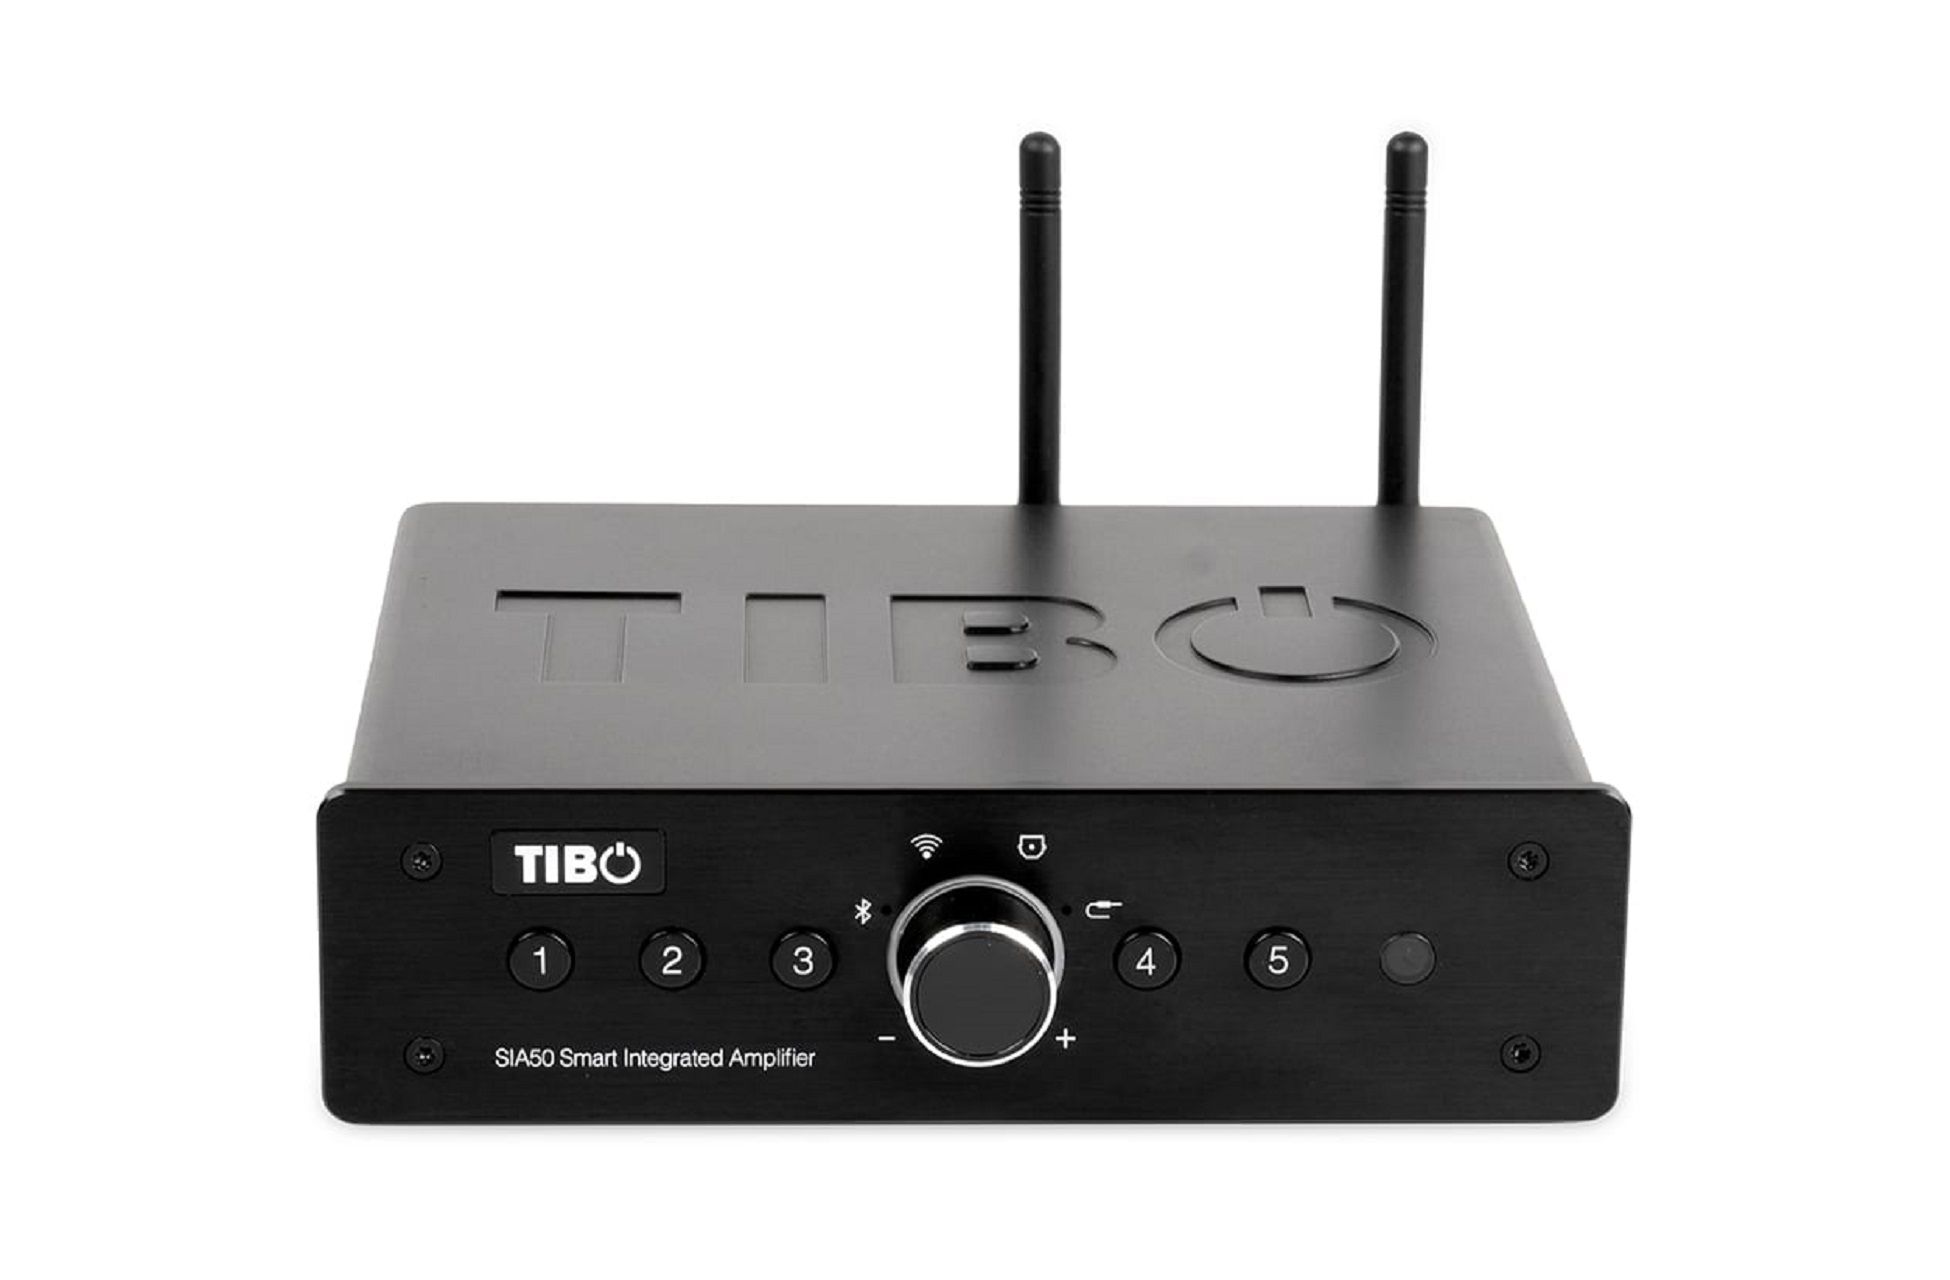  Tibo SIA50 Network Stereo Amplifier